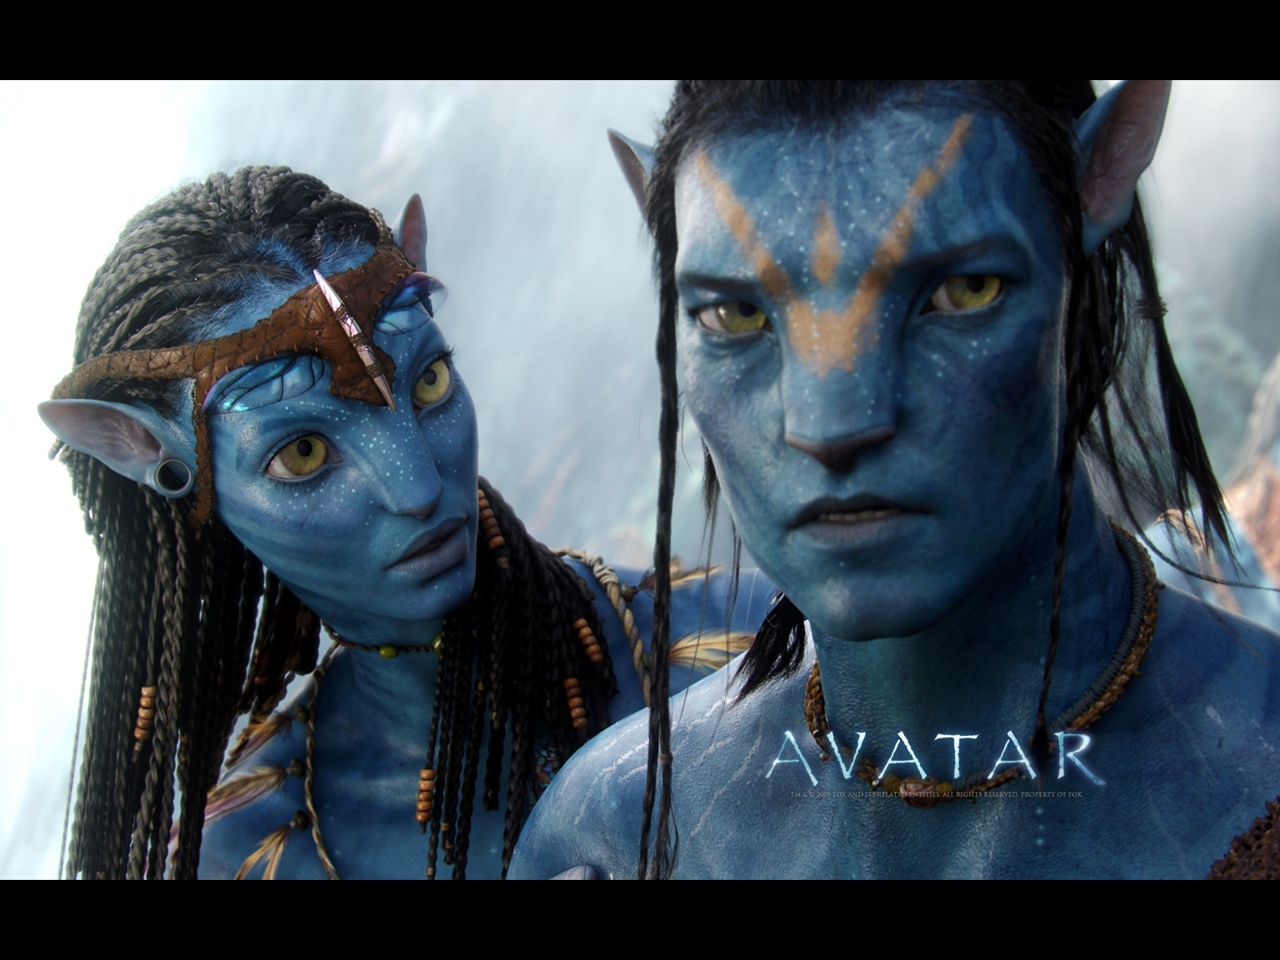 James Cameron's "Avatar" desktop wallpaper number 4 (1280 x 960 pixels)